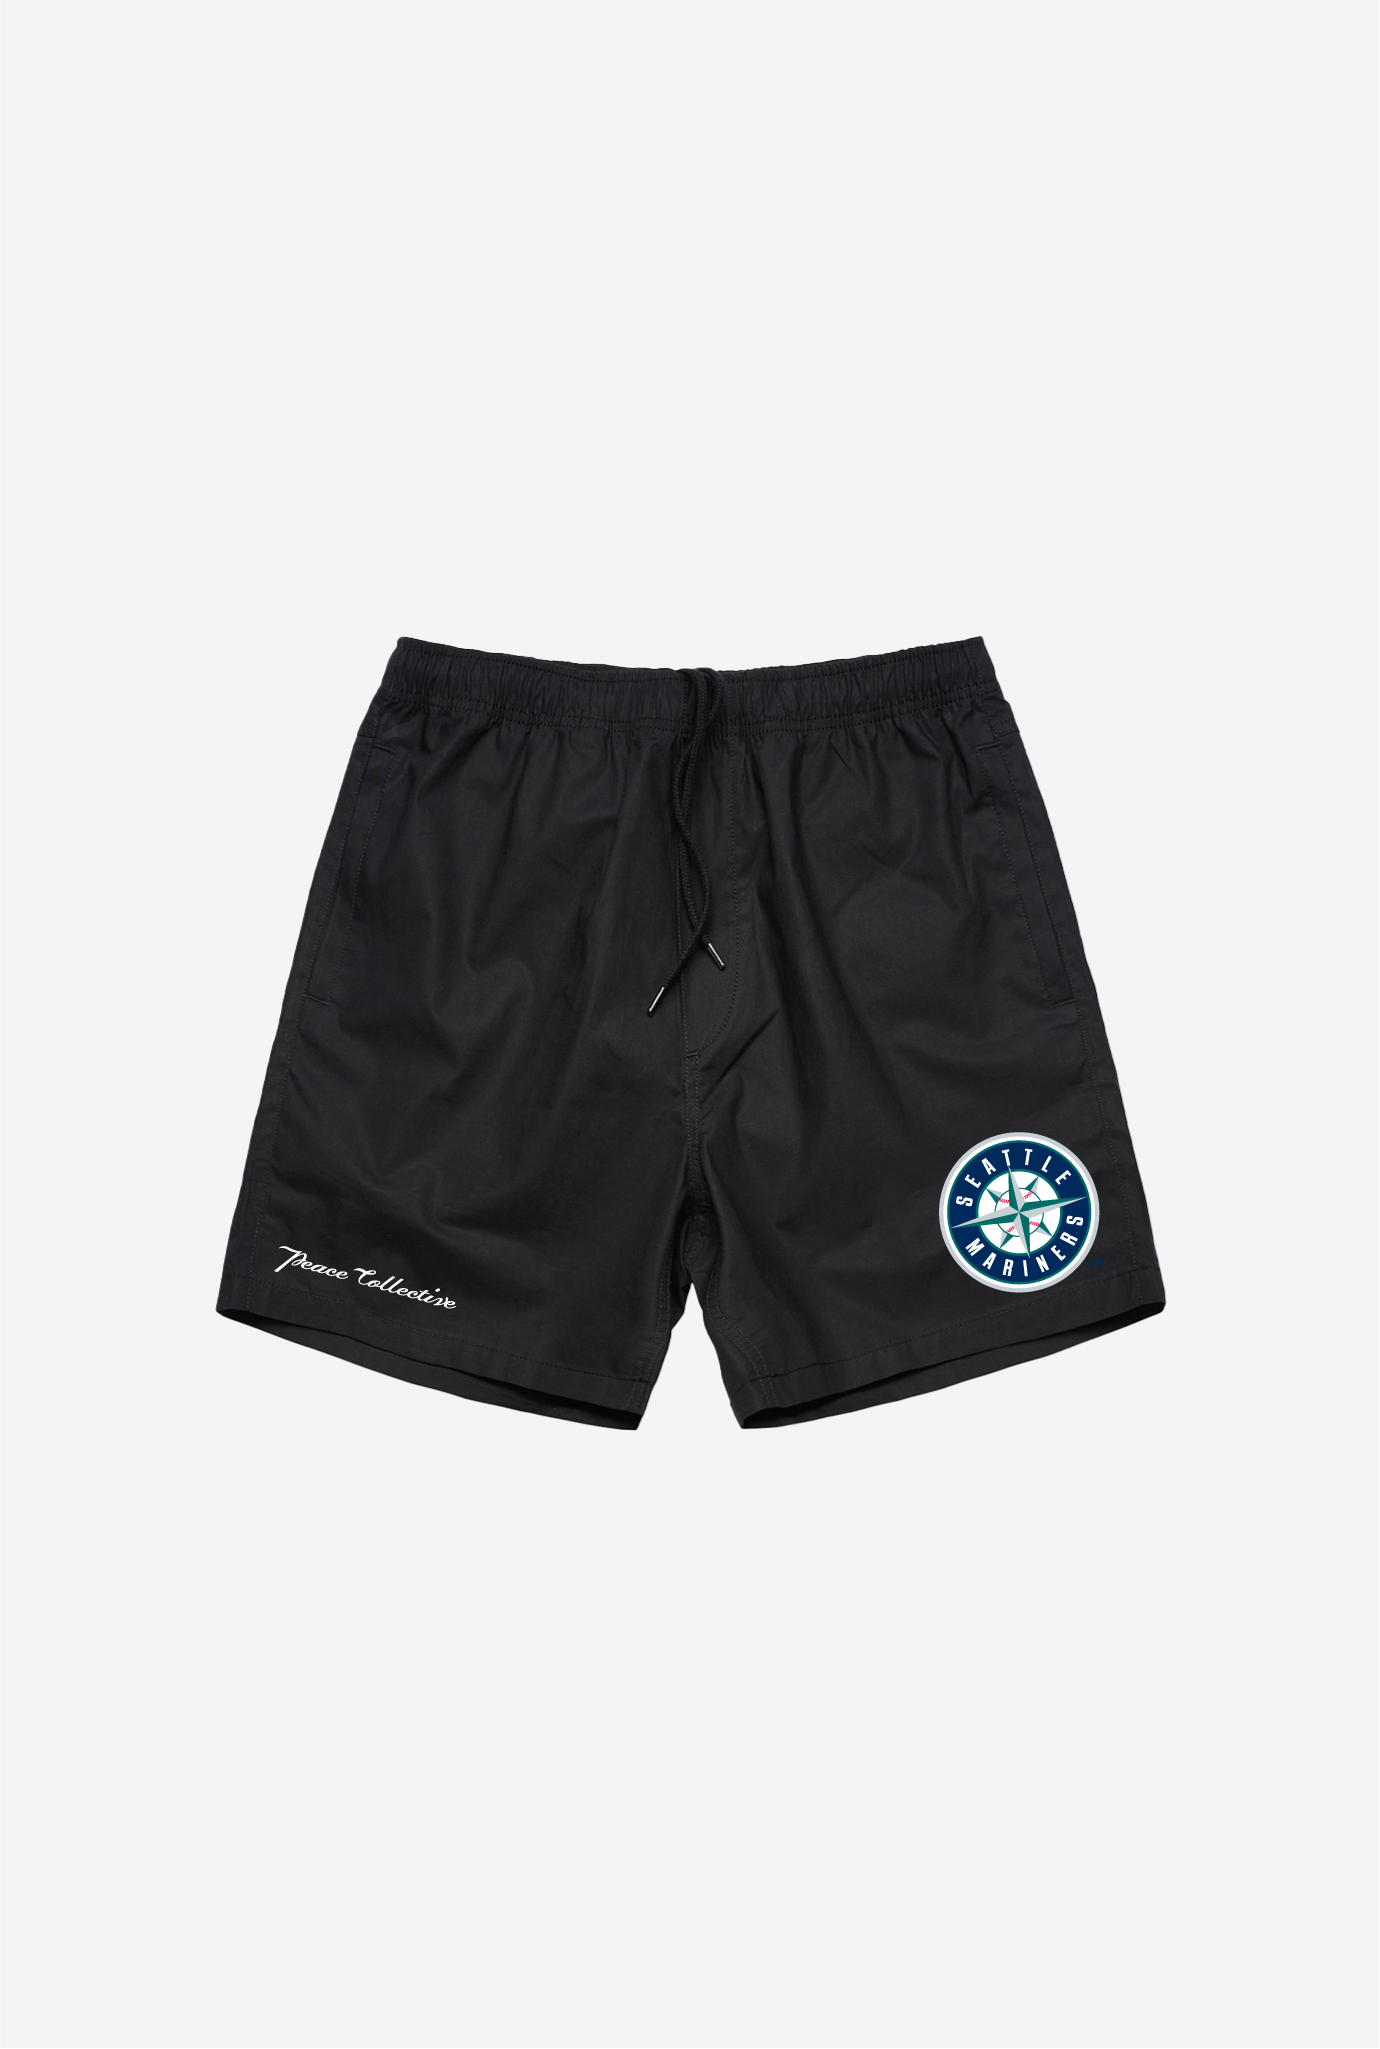 Seattle Mariners Shorts - Black